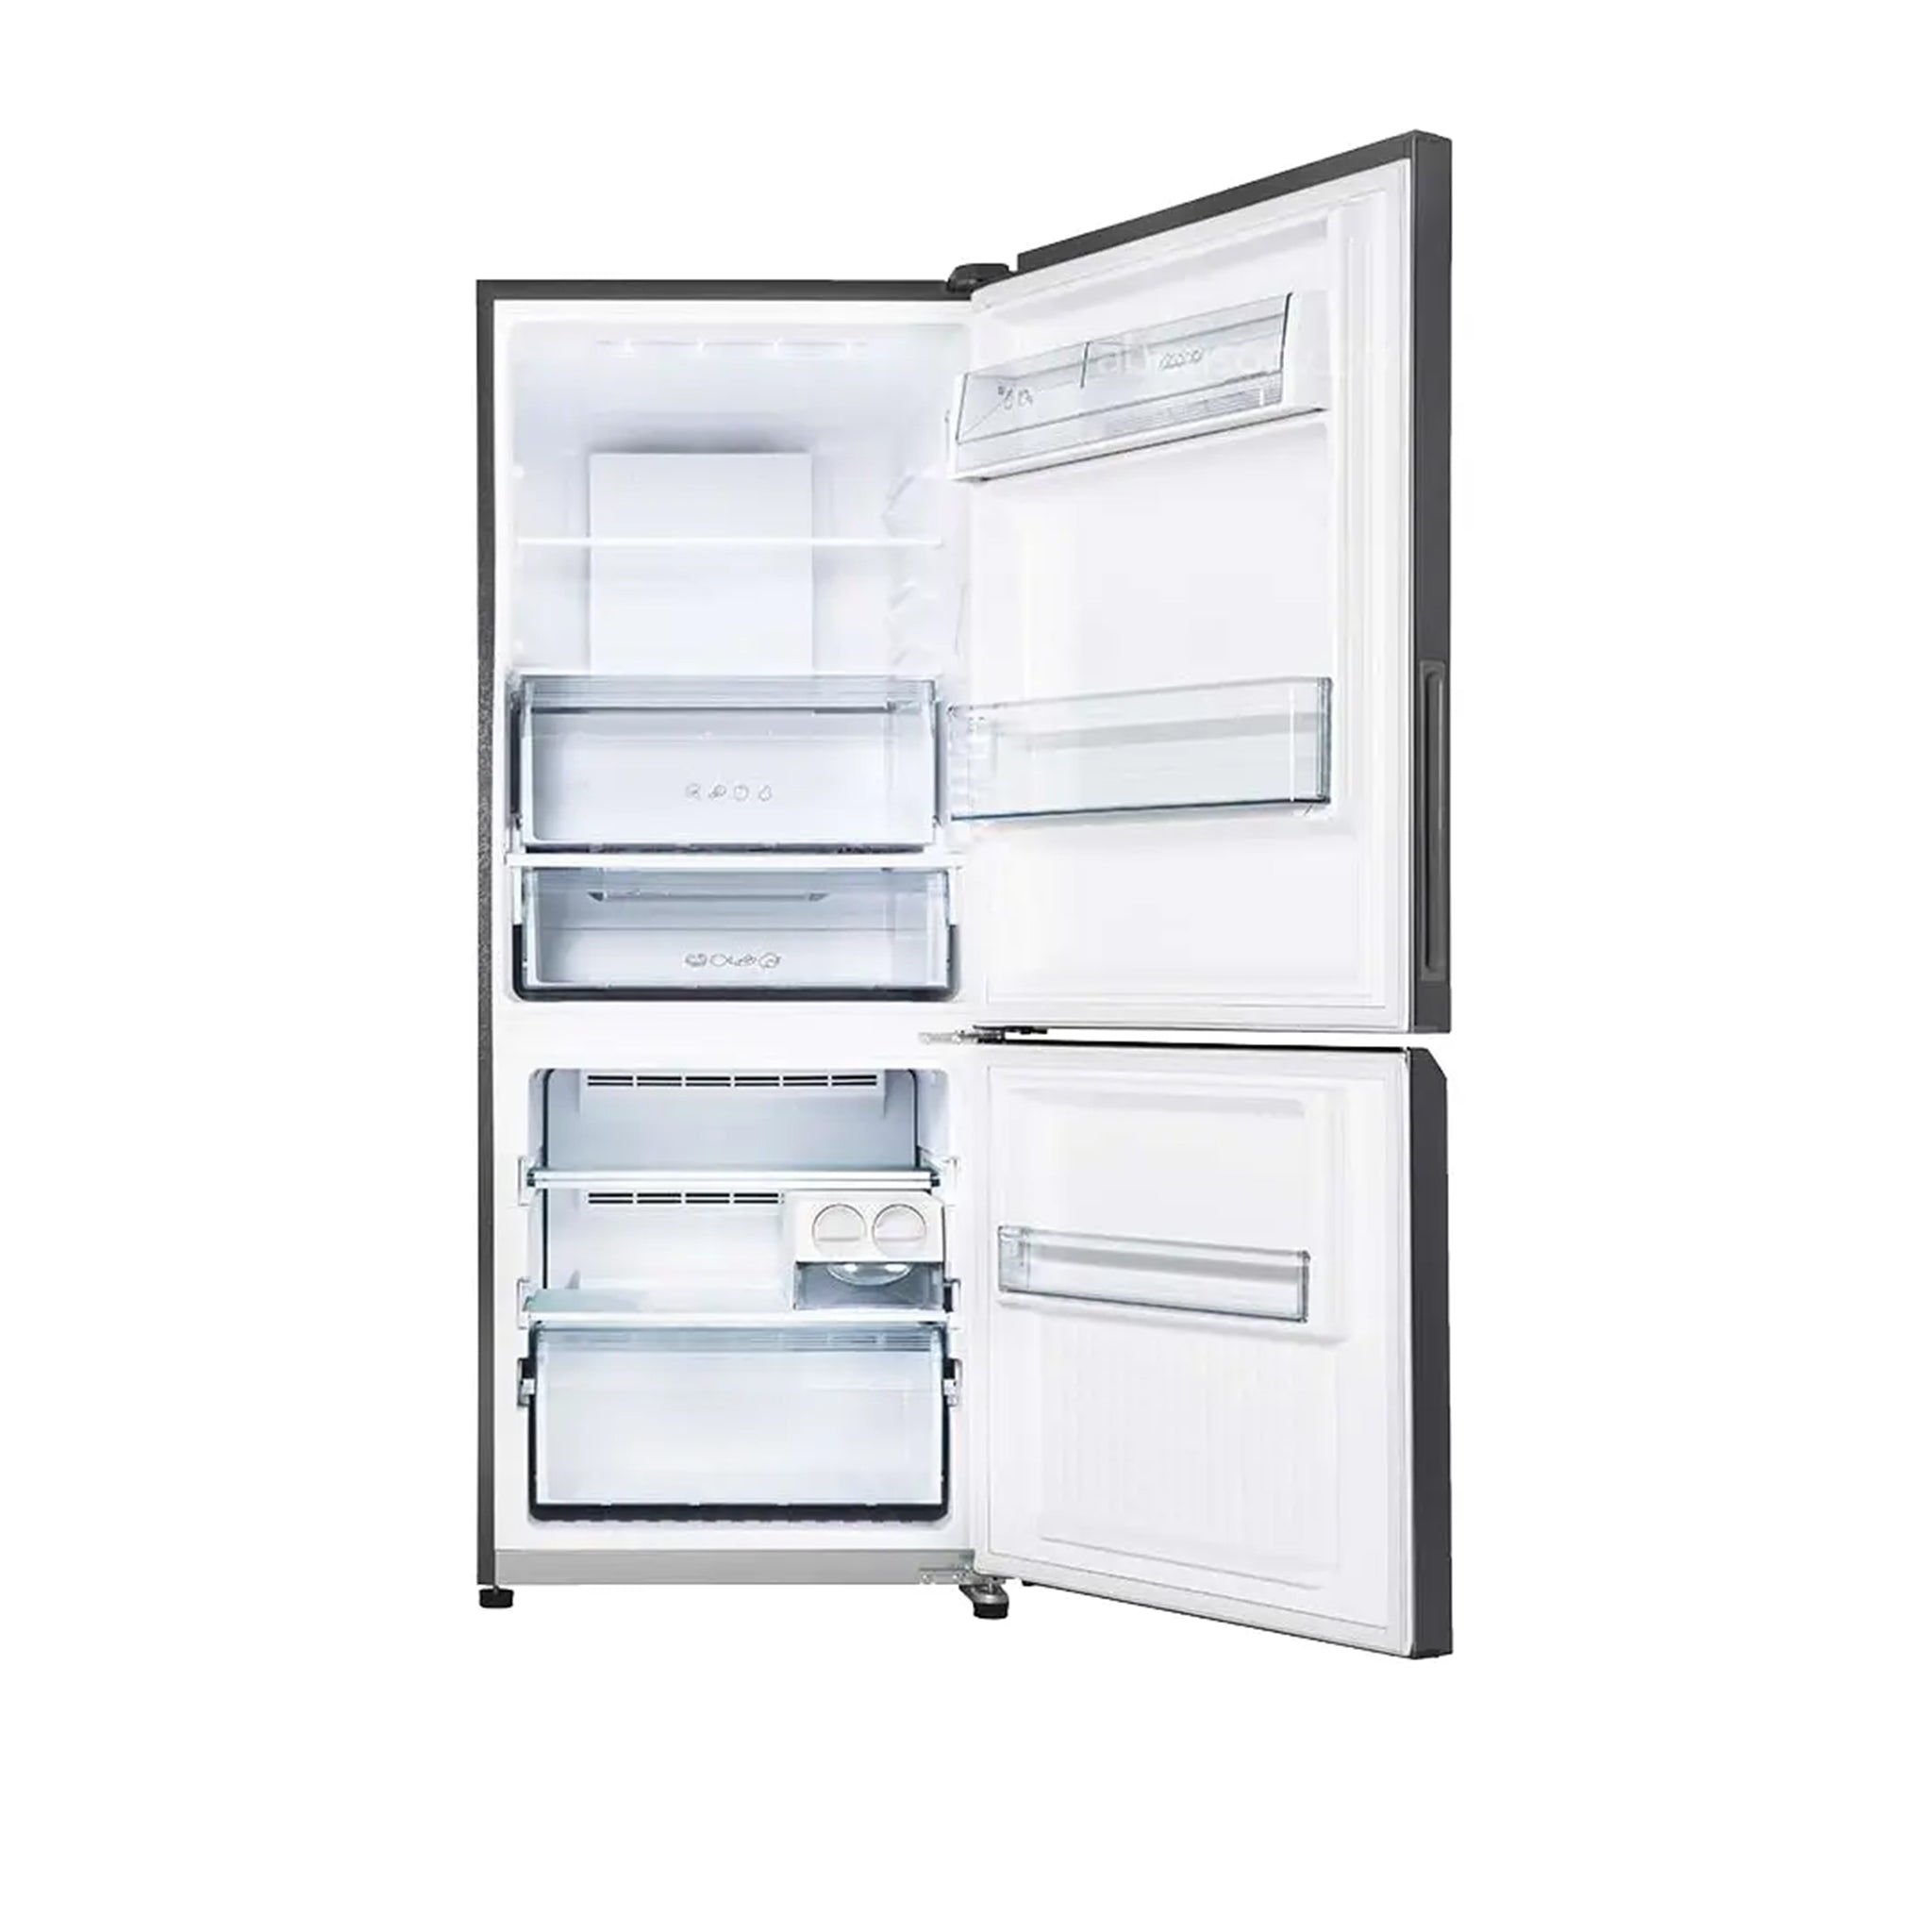 PANASONIC 9.0 cu.ft NR-BV280XSPH 2-Door Bottom Freezer Refrigerator Panasonic